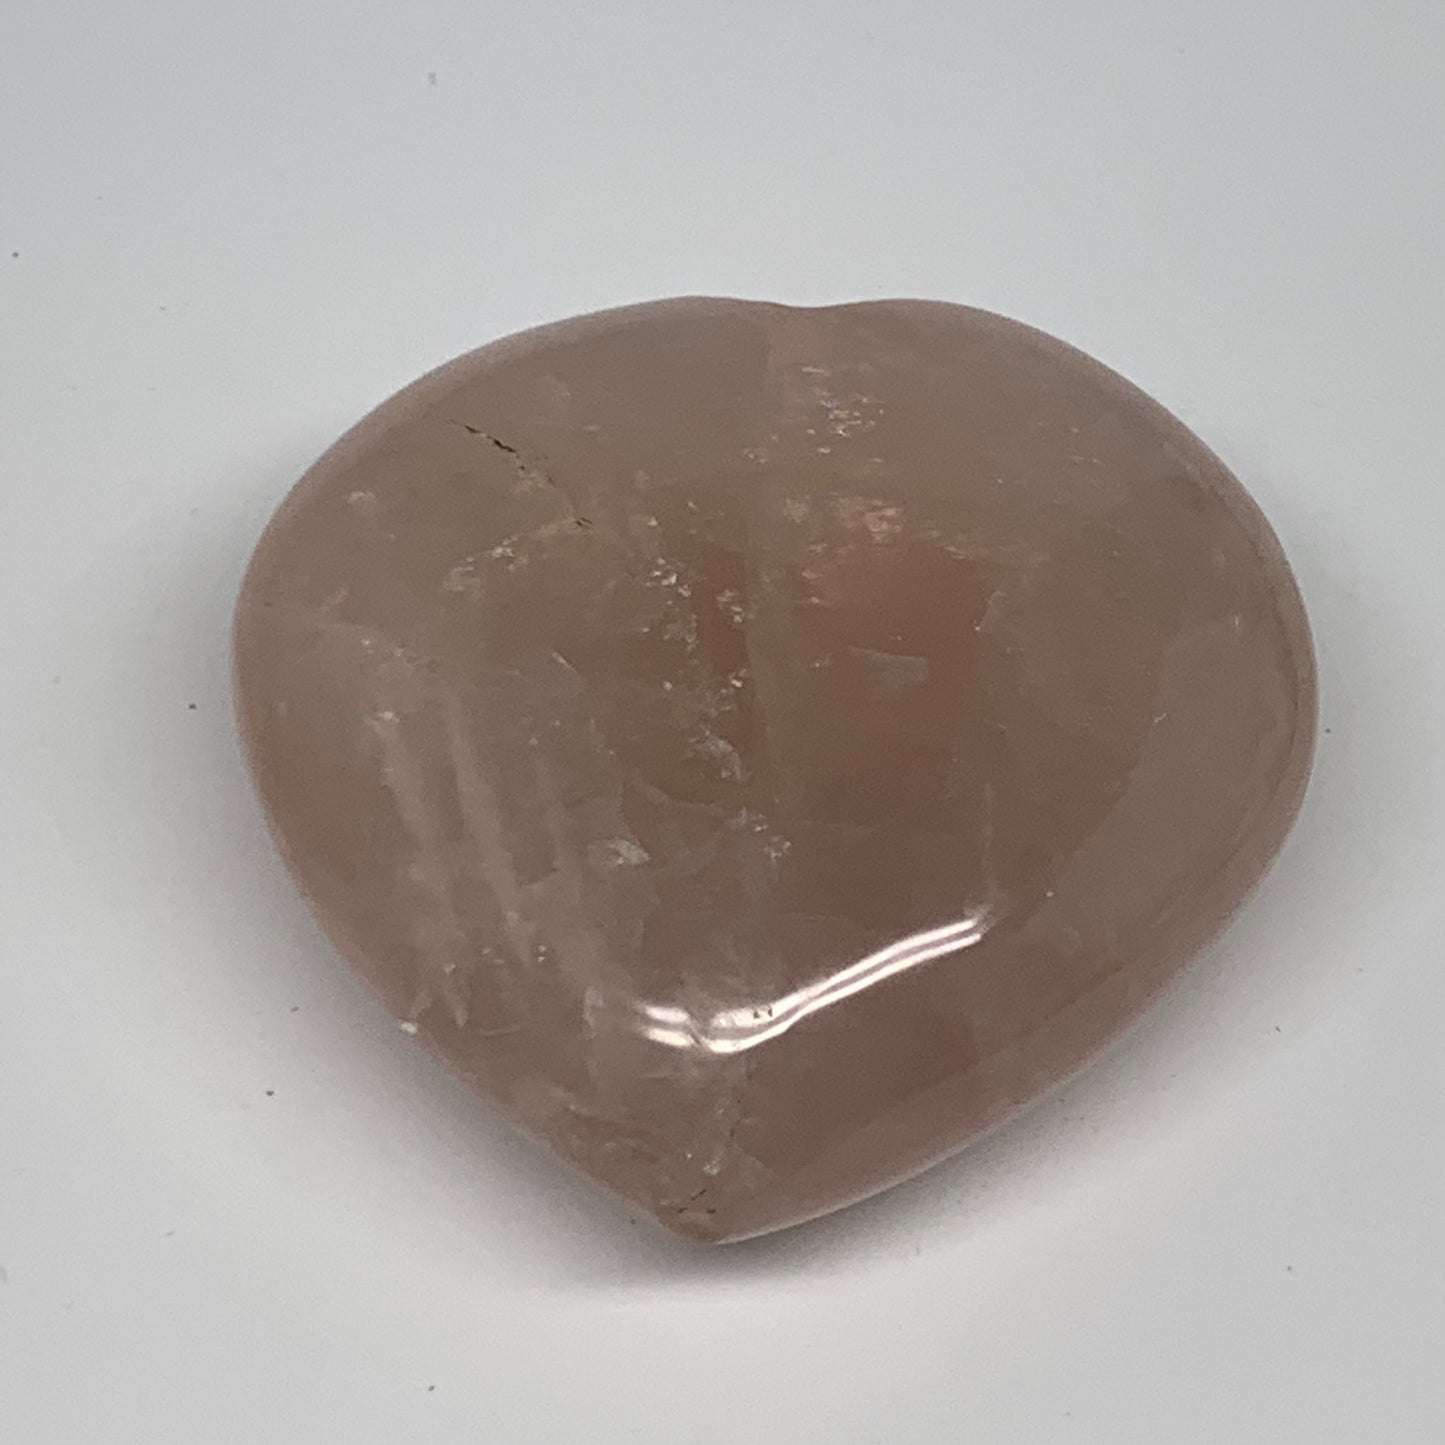 275.8g, 3.1" x 3.1" x 1.3" Rose Quartz Heart Healing Crystal @Madagascar, B17426